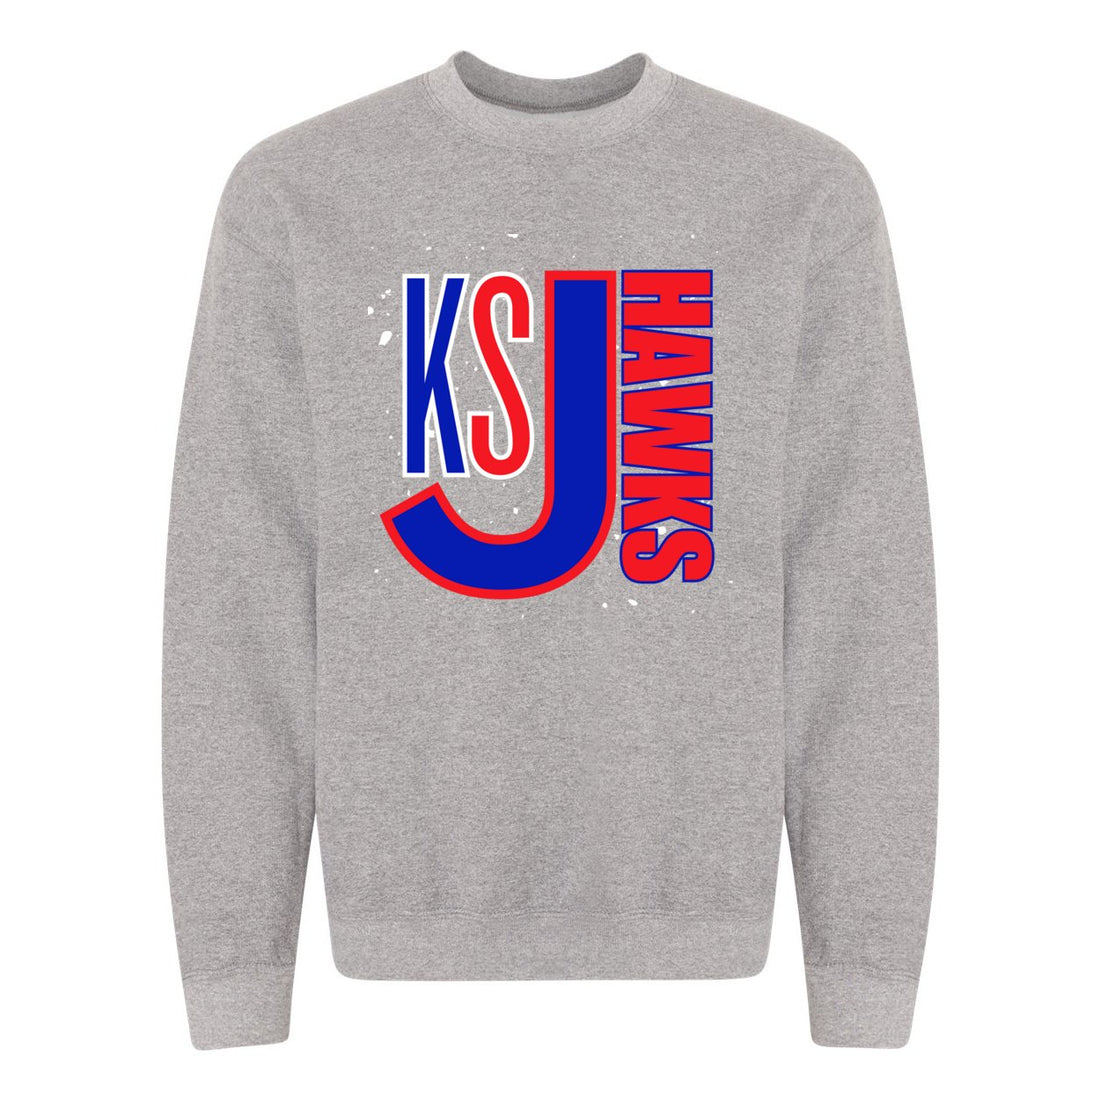 J-Hawks Crewneck Sweatshirt - Sweaters/Hoodies - Positively Sassy - J-Hawks Crewneck Sweatshirt